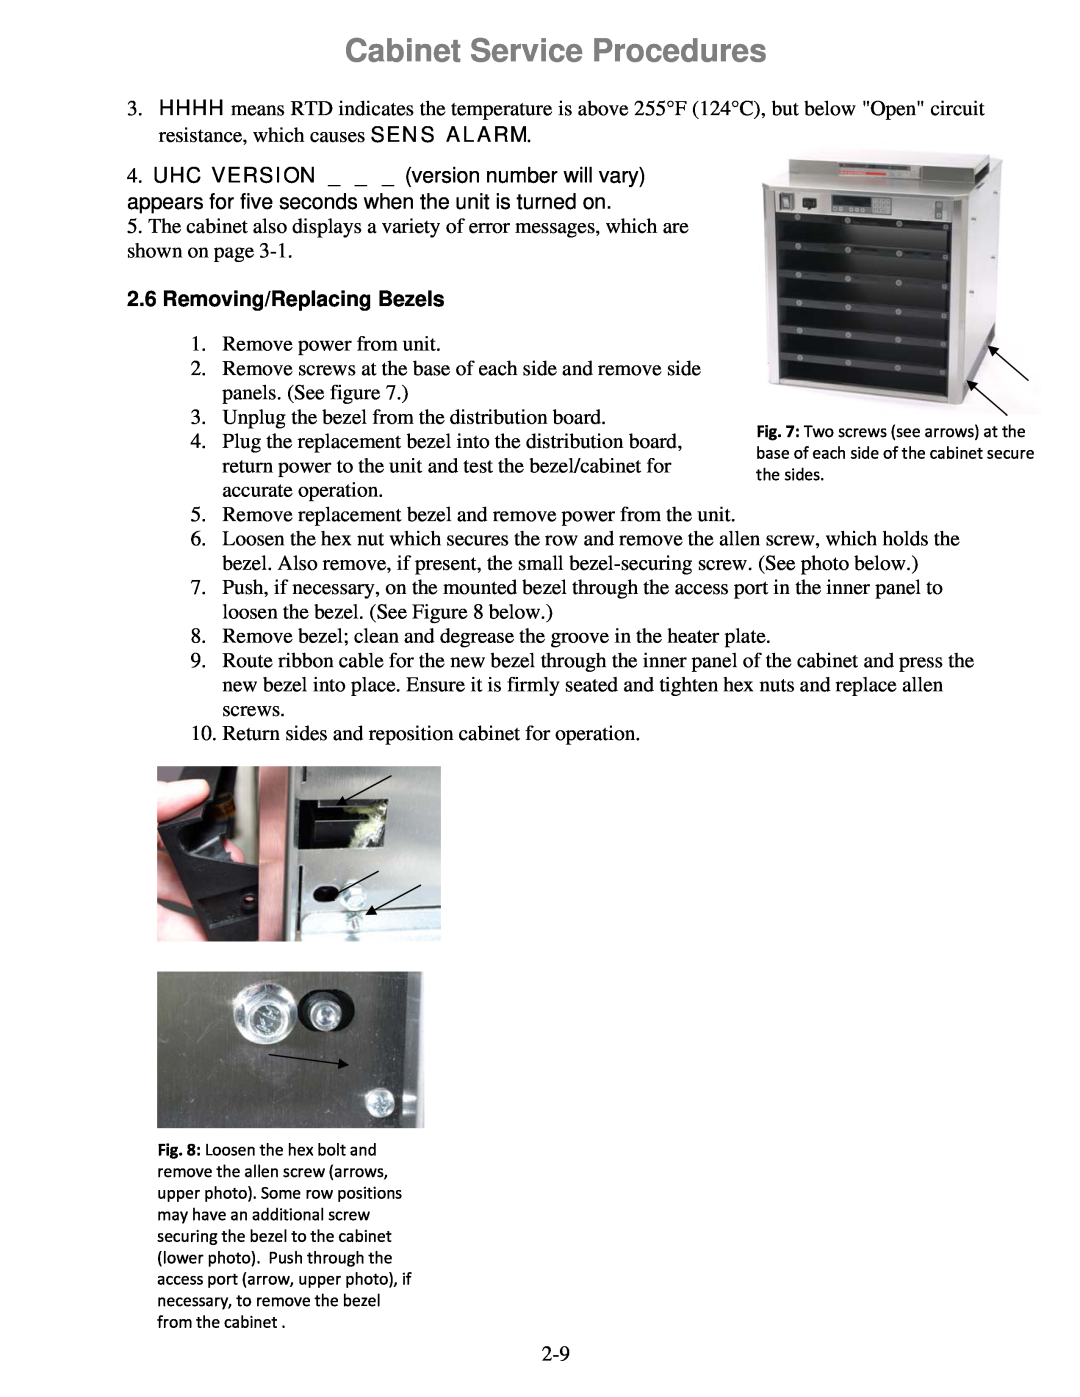 Frymaster 8196606 manual 2.6Removing/Replacing Bezels, Cabinet Service Procedures 